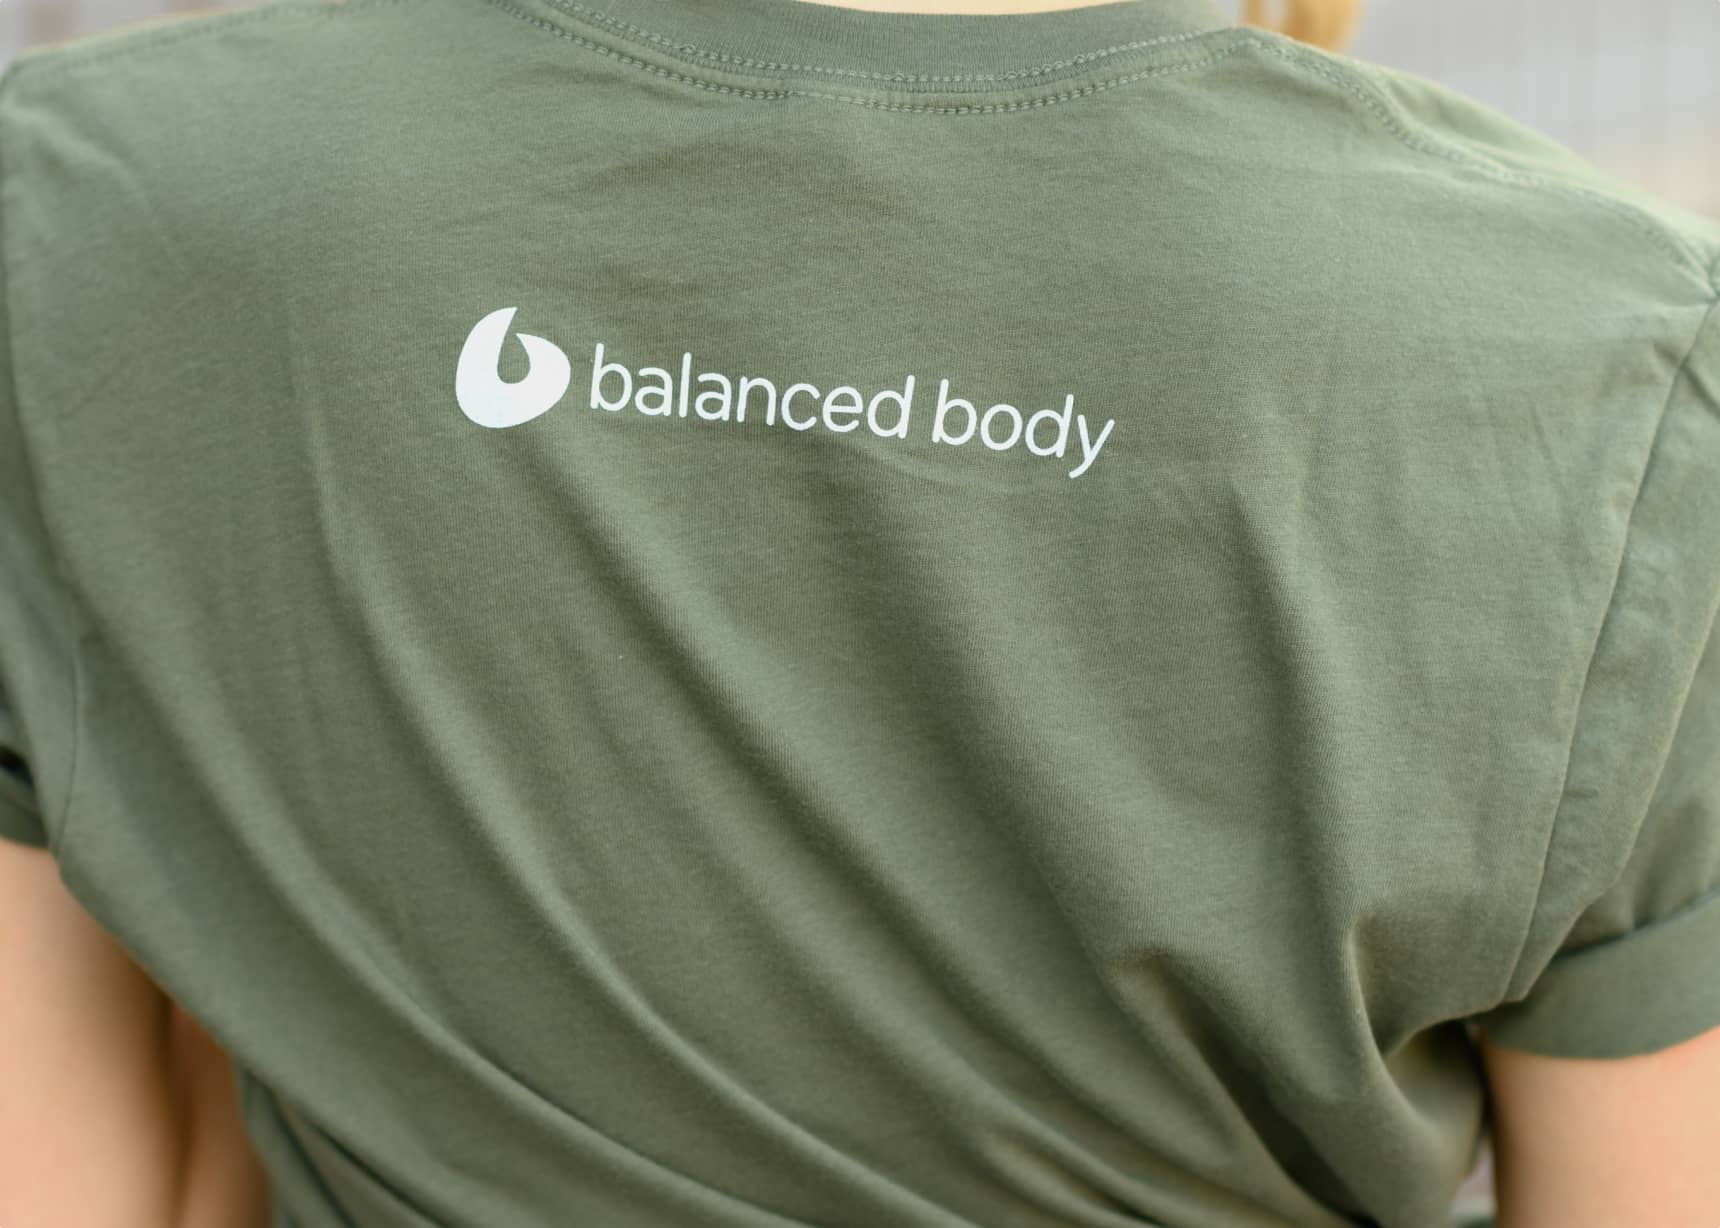 “In Pilates we Trust” T-shirt, Balanced Body